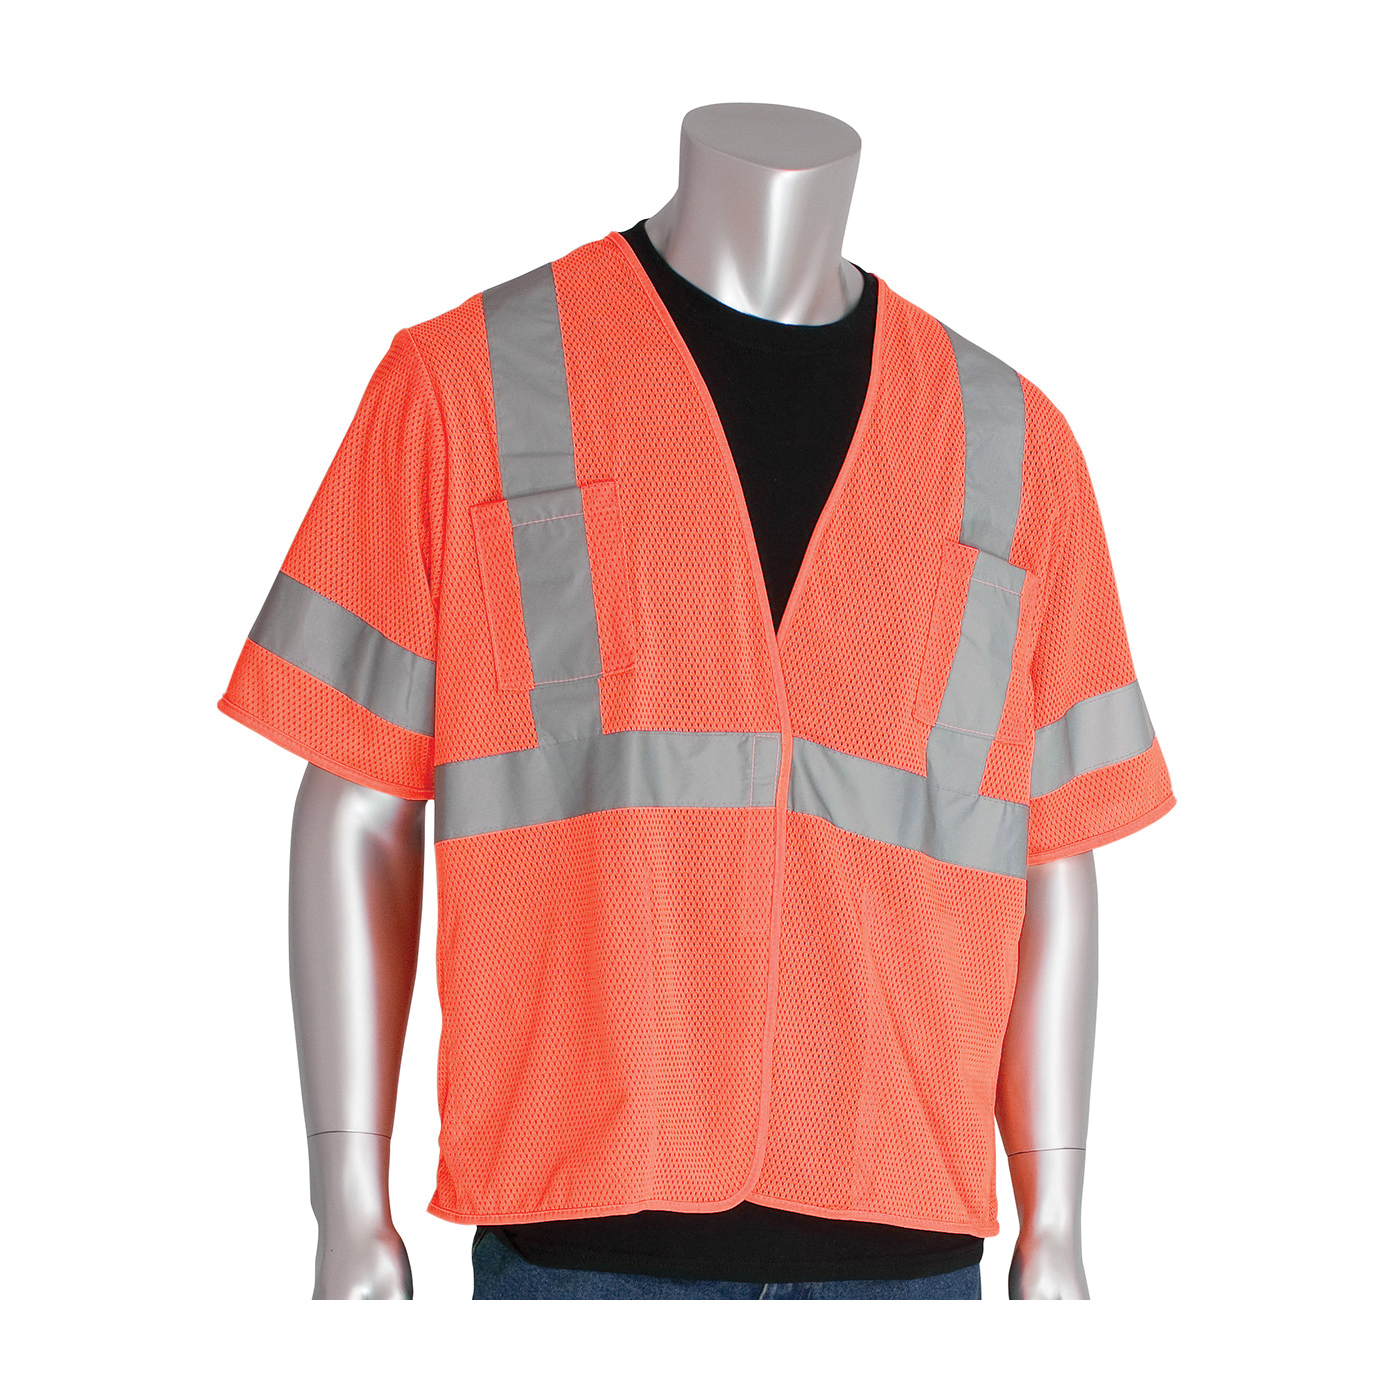 PIP® 303-HSVEOR-5X Safety Vest, 5XL, Hi-Viz Orange, Polyester Mesh, Hook and Loop Closure, 4 Pockets, ANSI Class: Class 3, ANSI 107 Type R